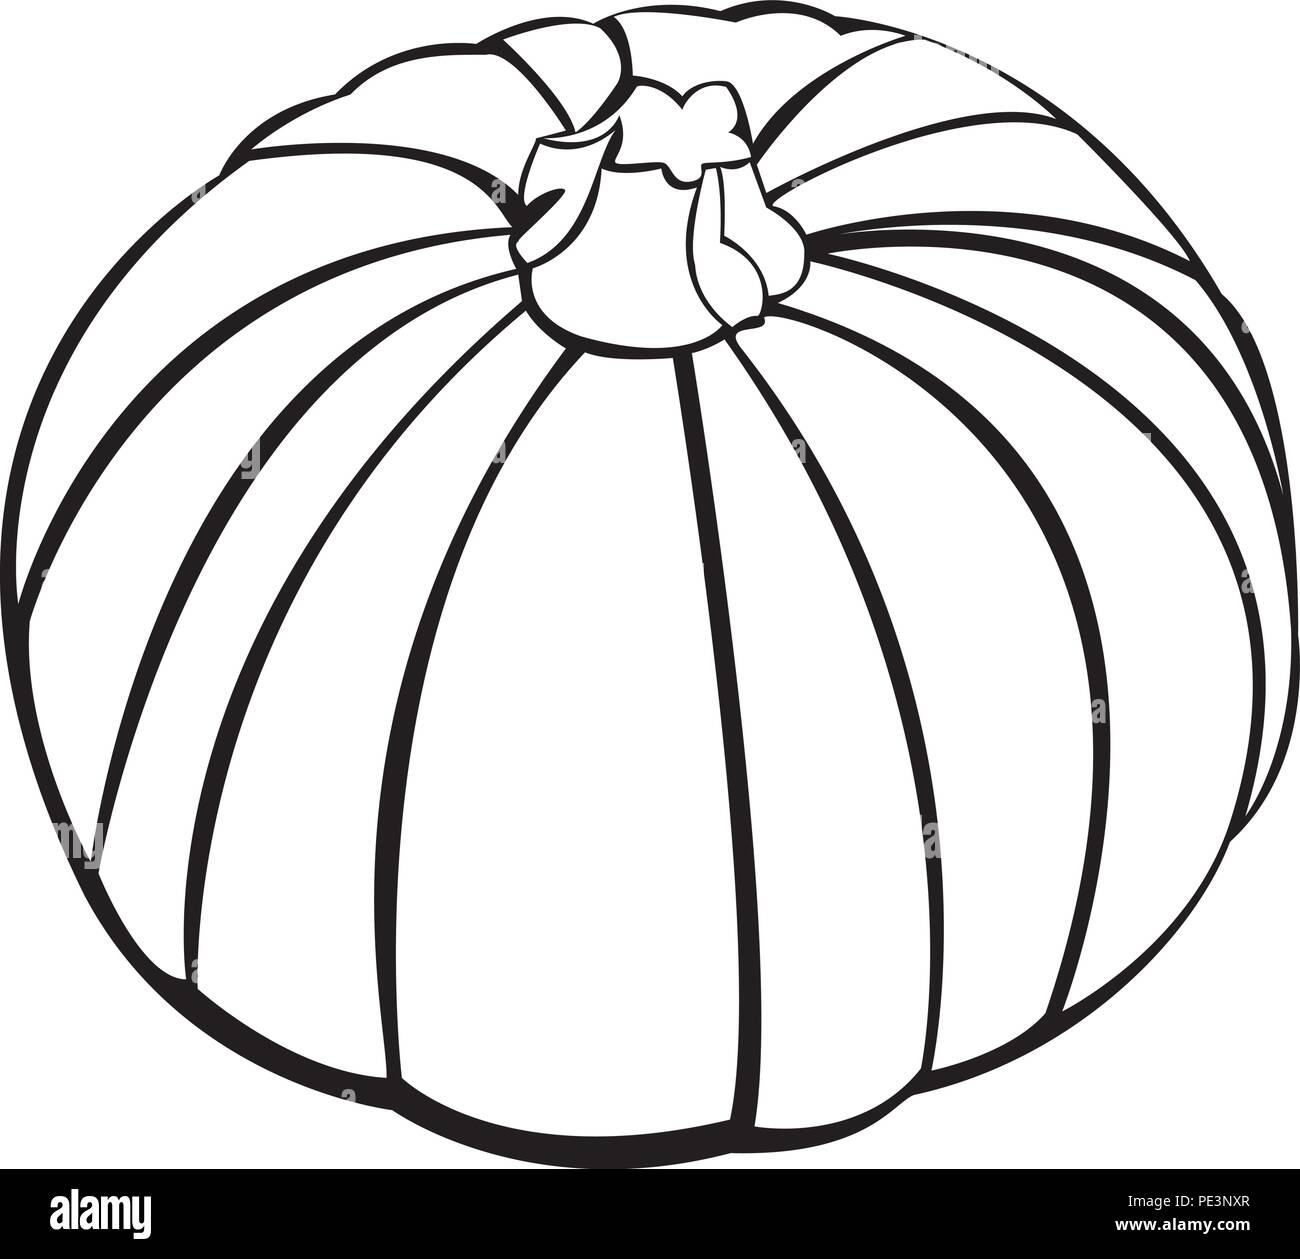 Black and white illustration of pumpkin Stock Vector